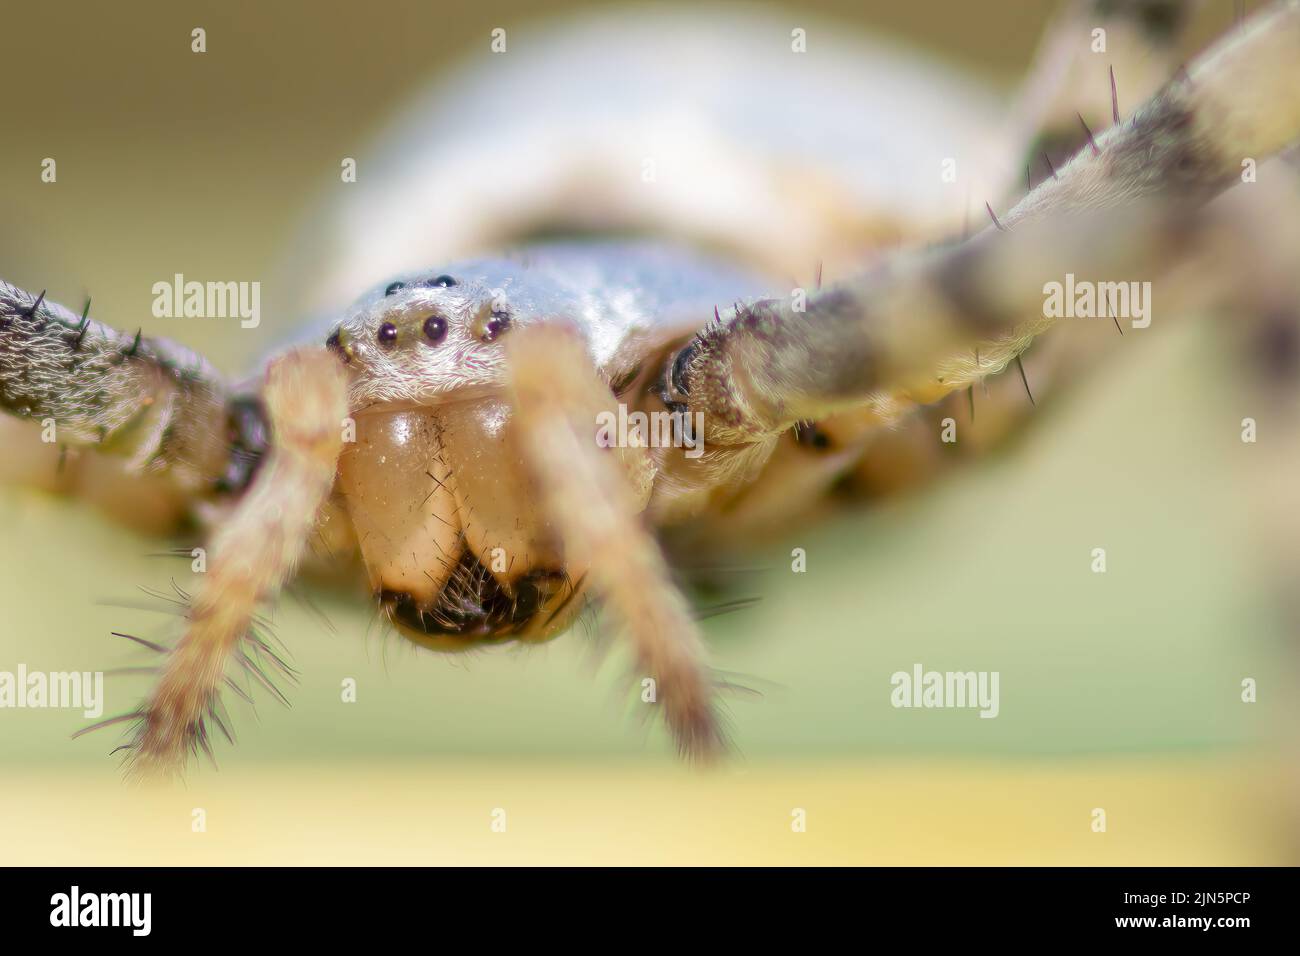 Argiope Lobada spider close up. Macro photo. Stock Photo